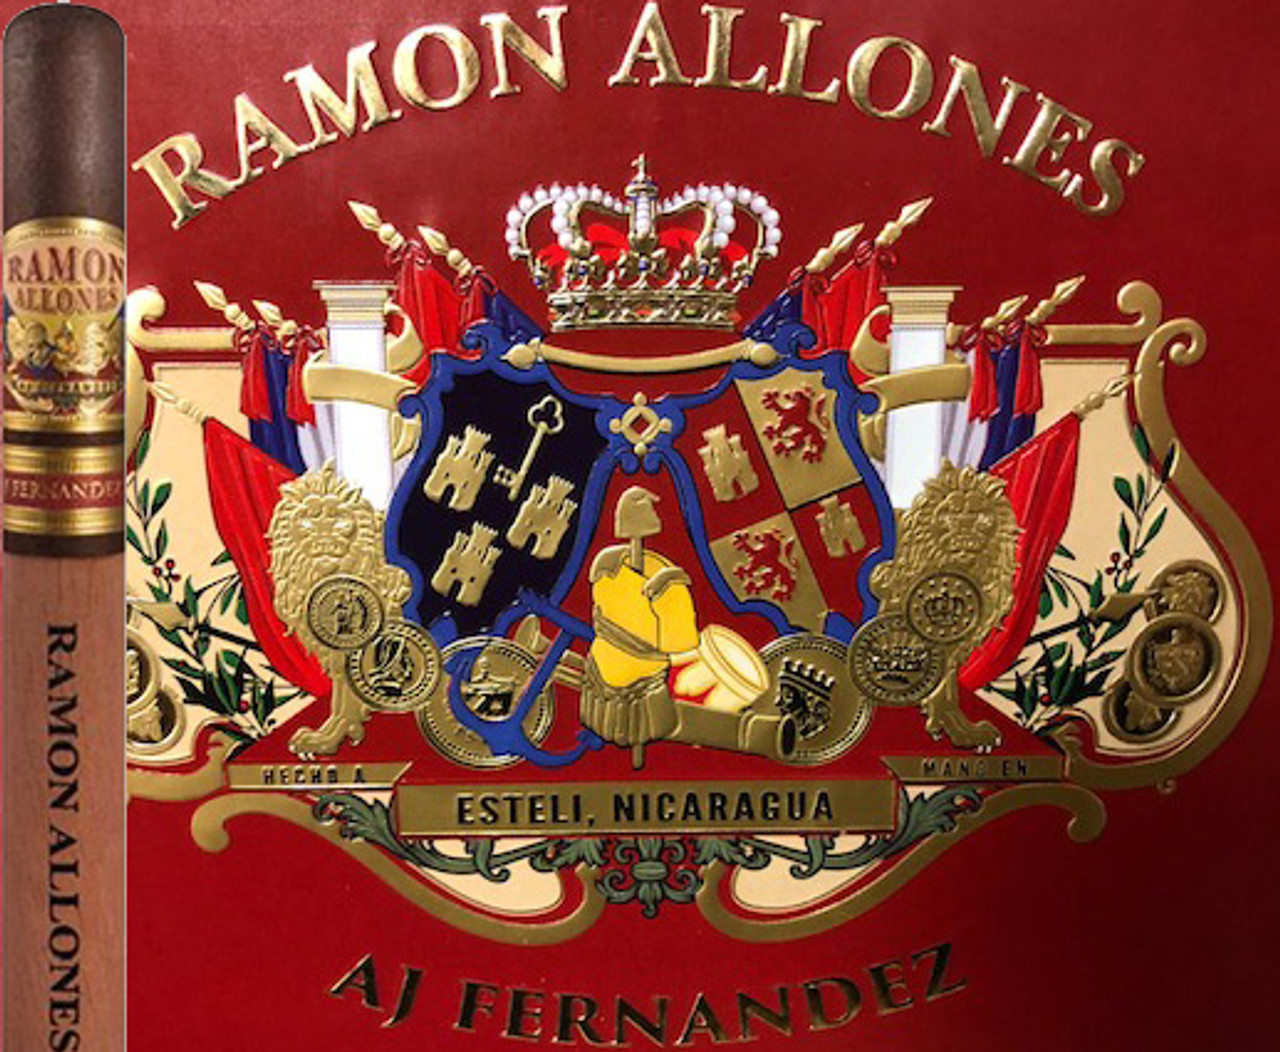 Ramon Allones by AJ Fernandez Robusto